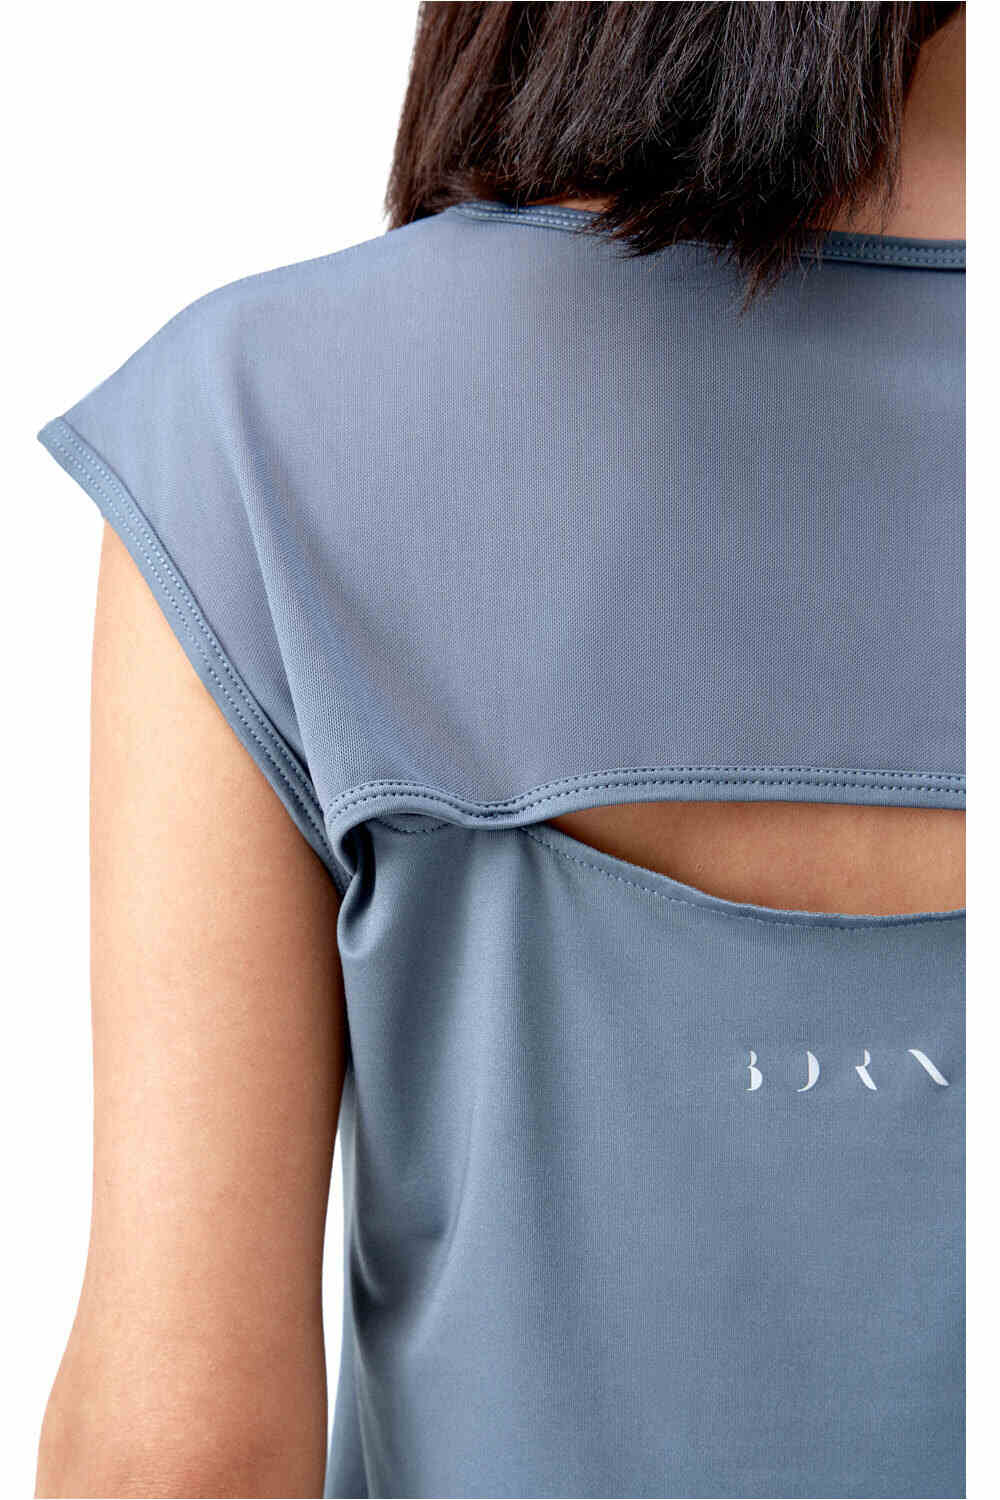 Born Living Yoga camisetas yoga Shirt Sira vista detalle